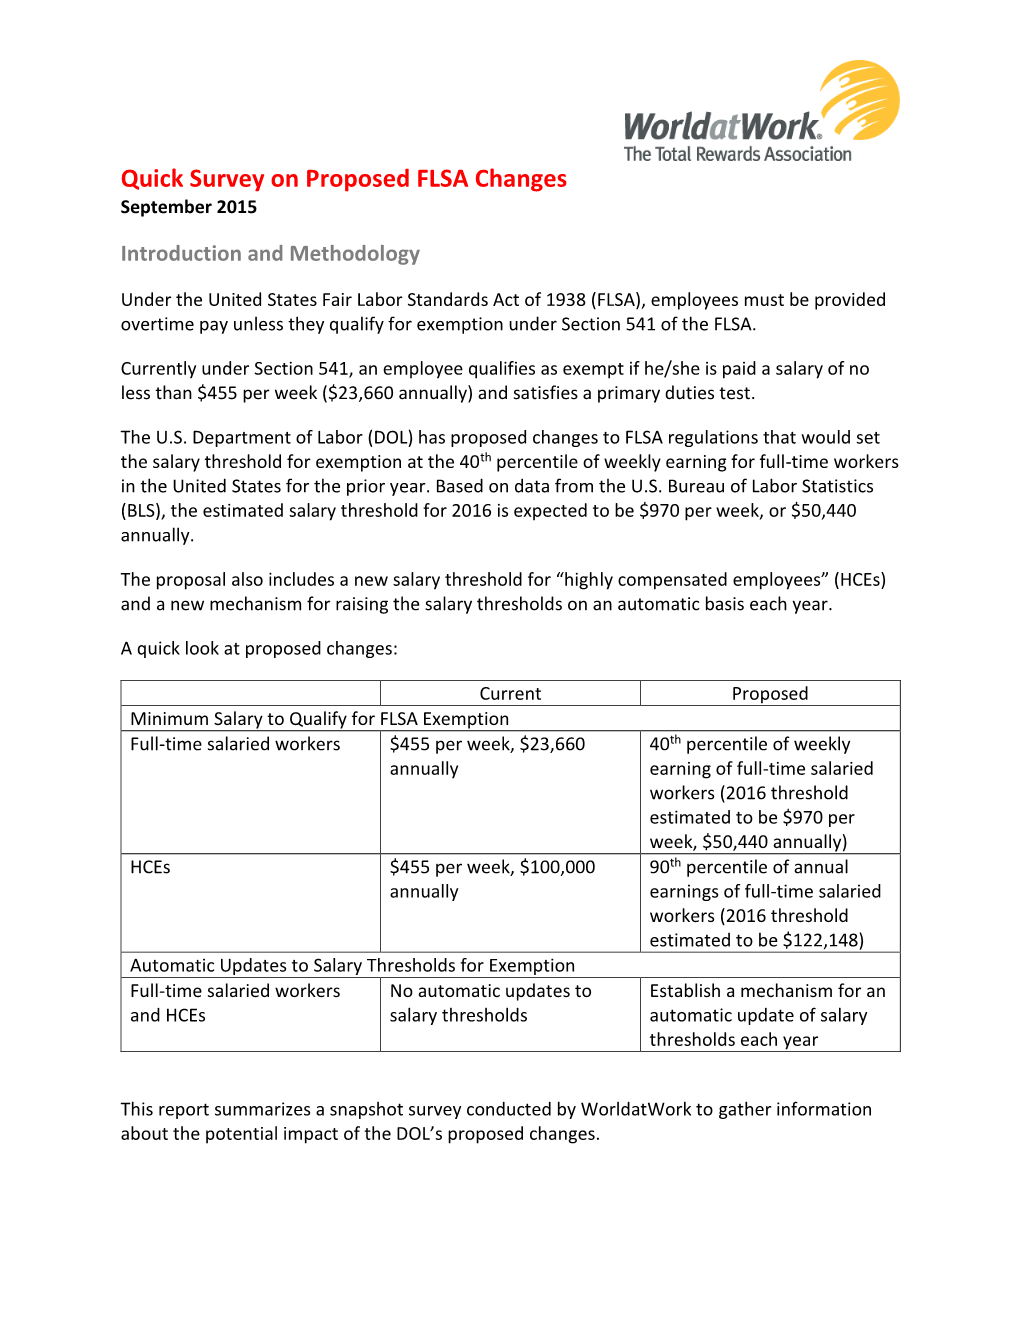 Quick Survey on Proposed FLSA Changes September 2015